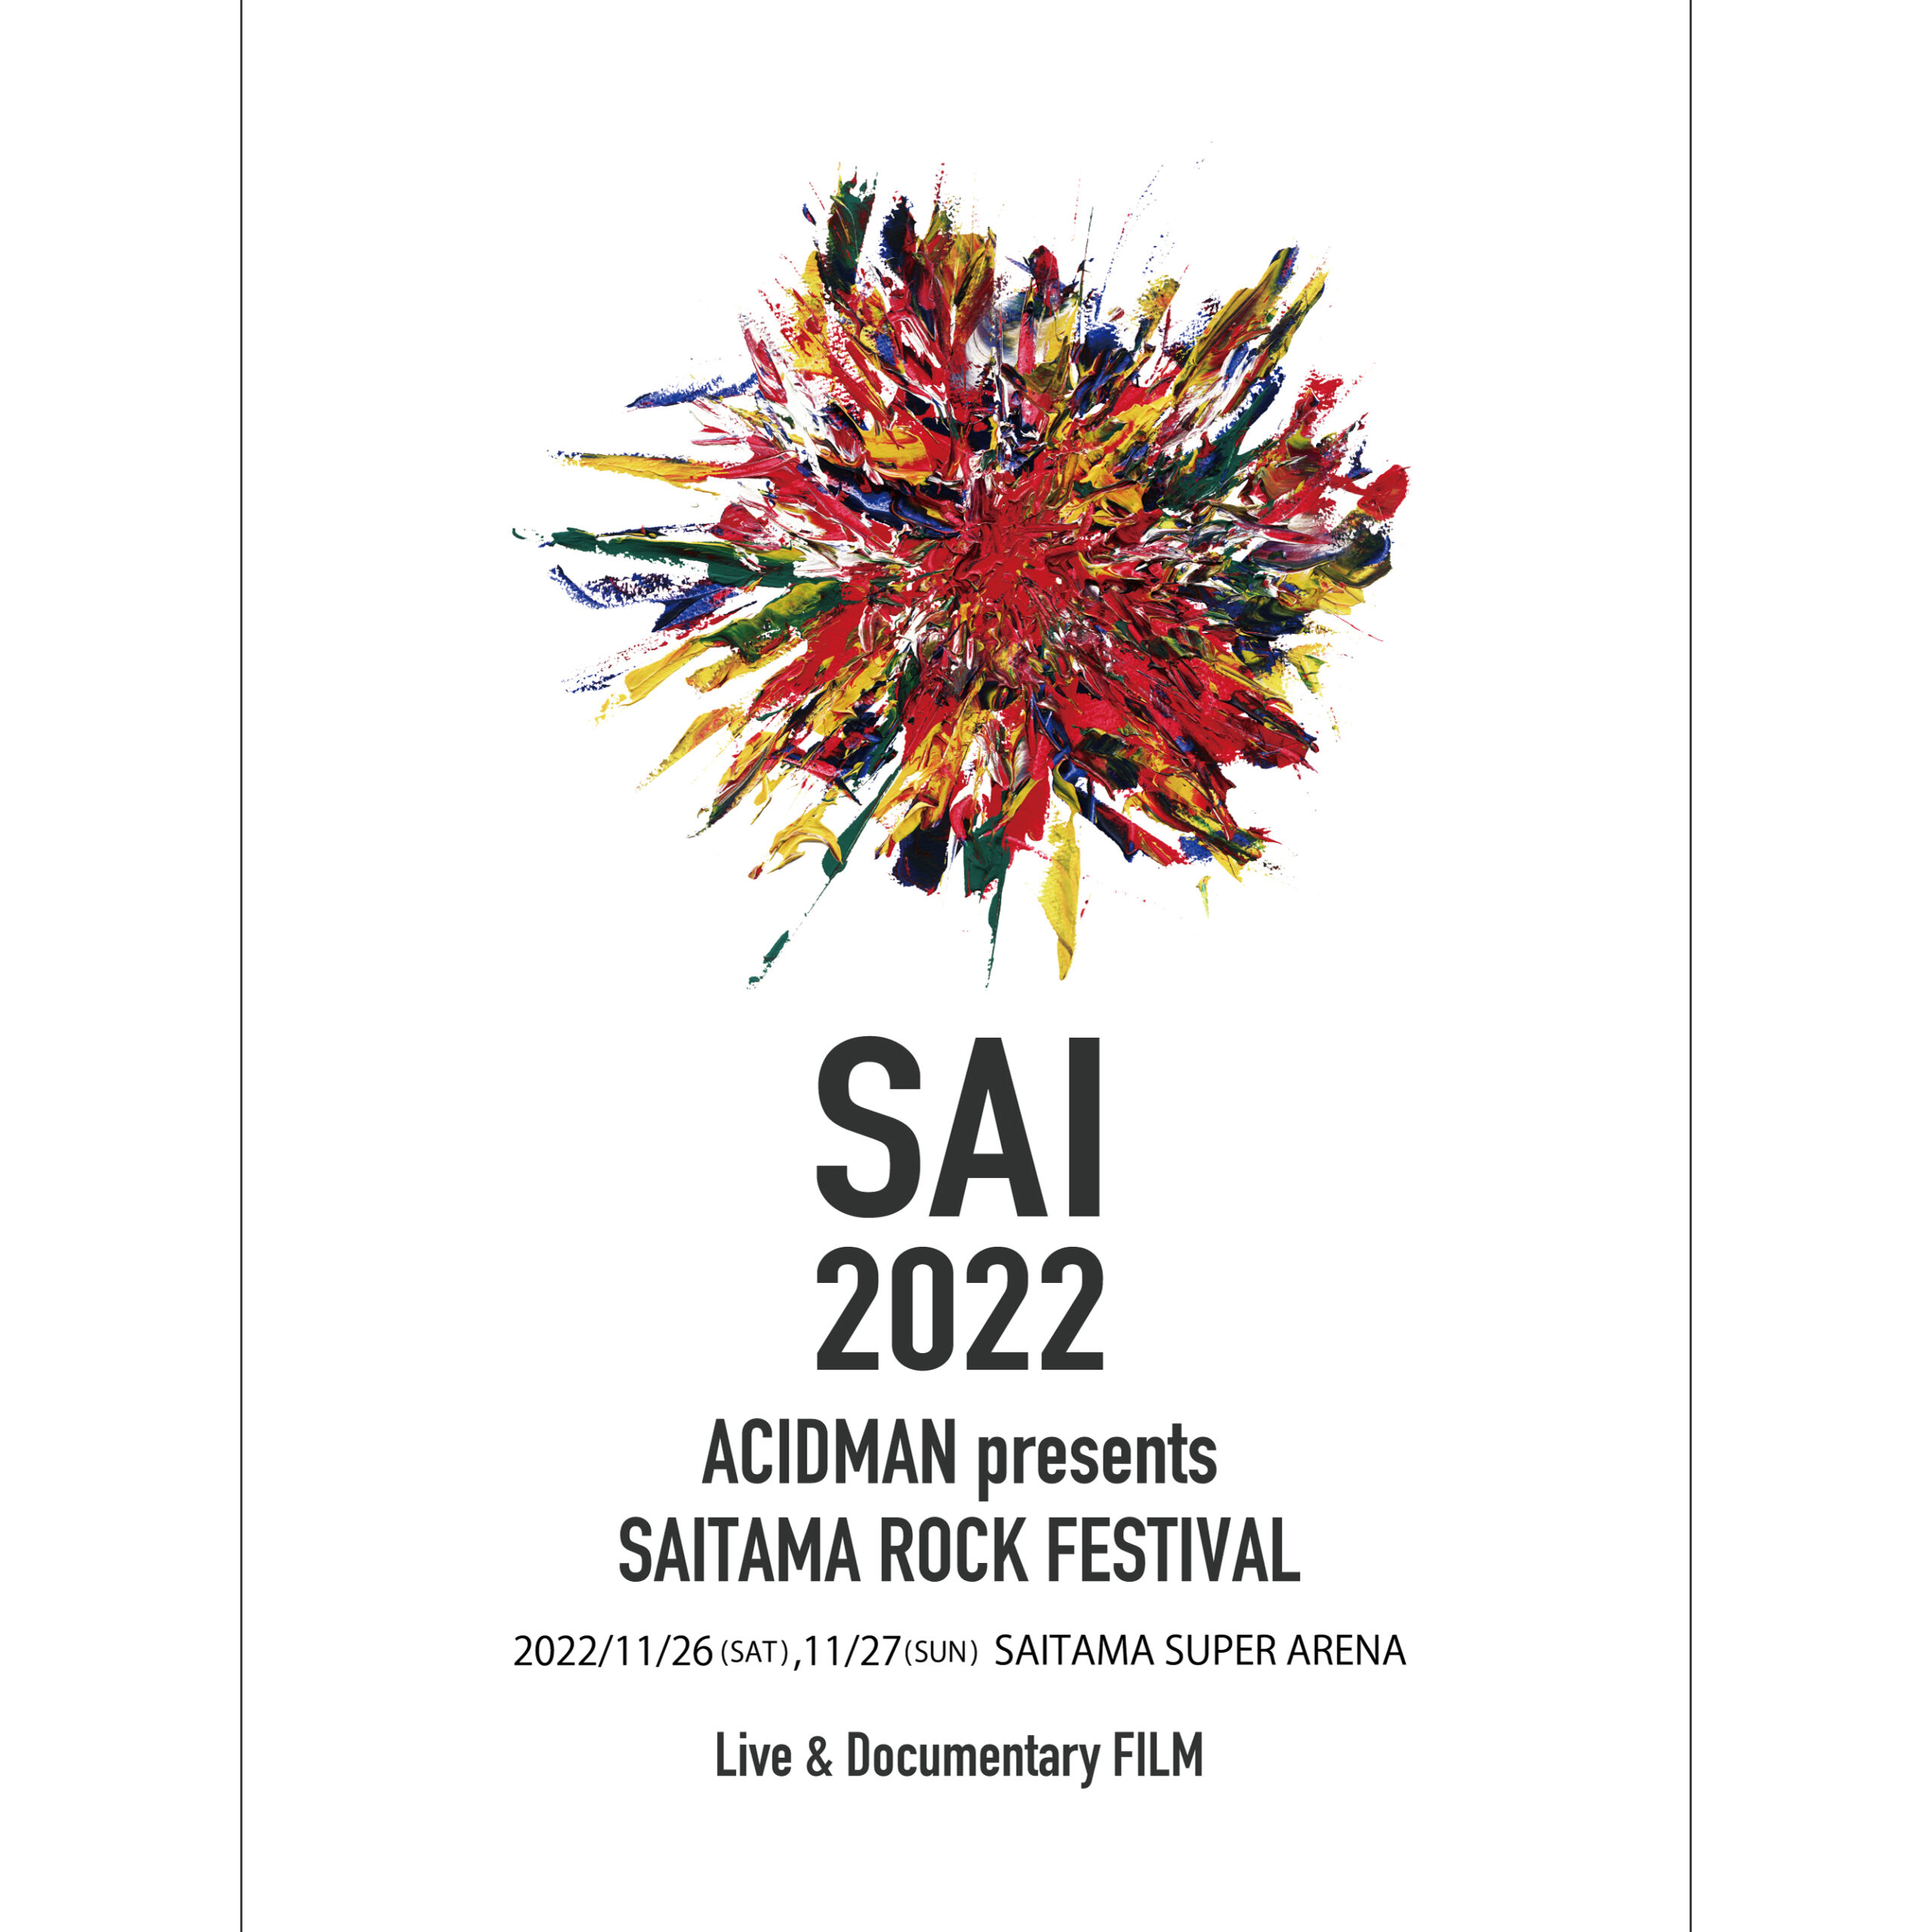 ACIDMAN presents「SAITAMA ROCK FESTIVAL “SAI” 2022」Live & Documentary FILM